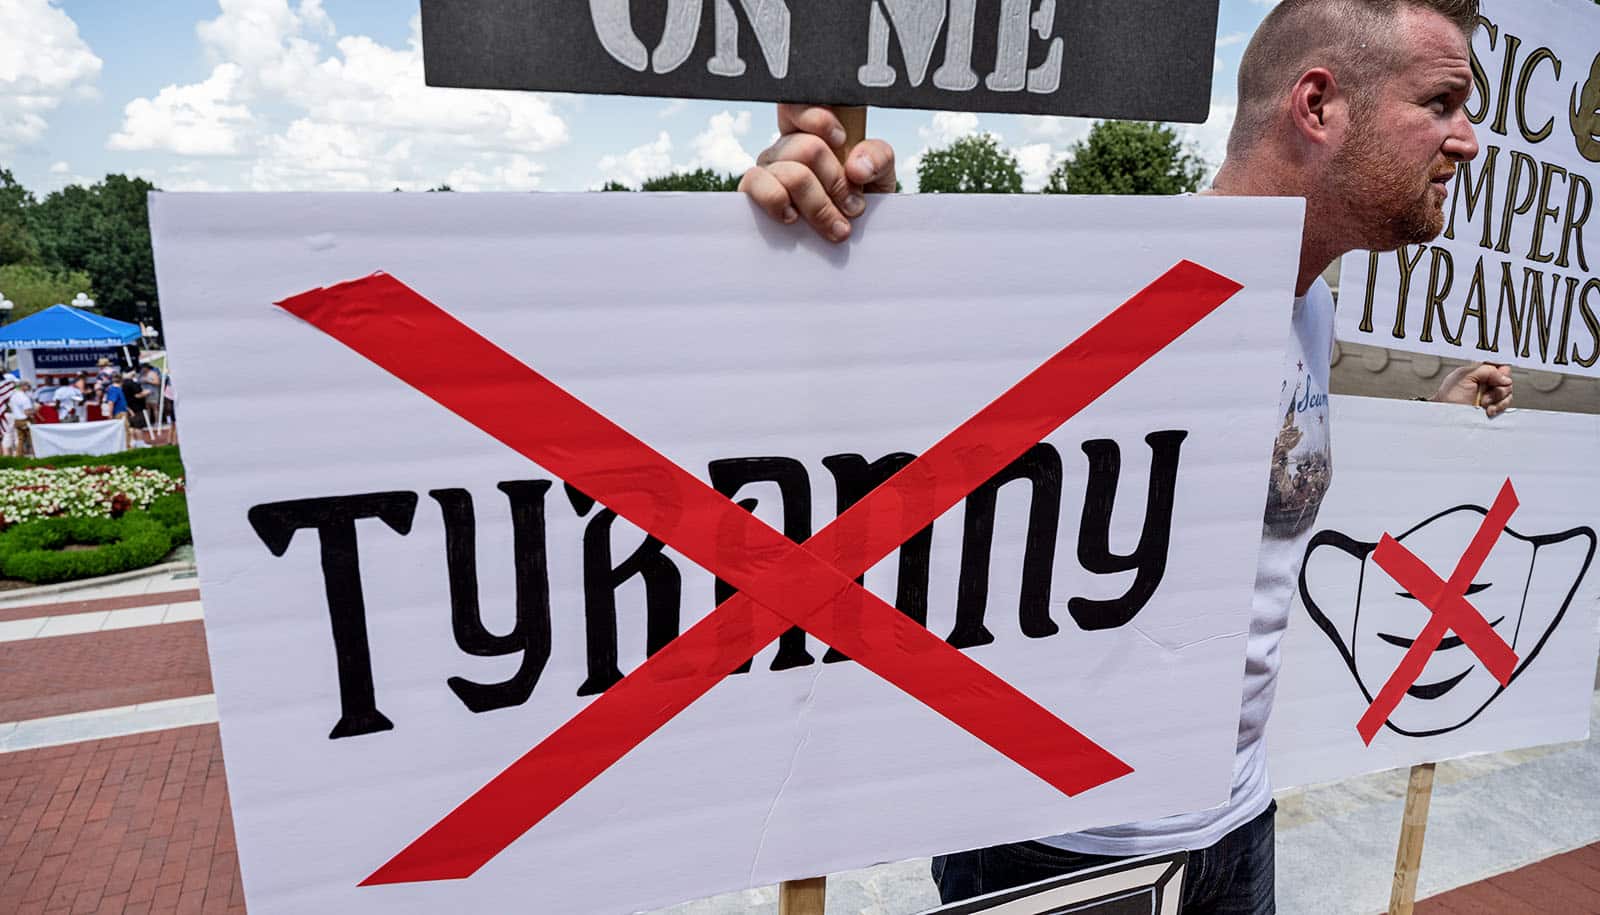 mand holder maske og "tyranni"-skilte med bureaukrati X'er